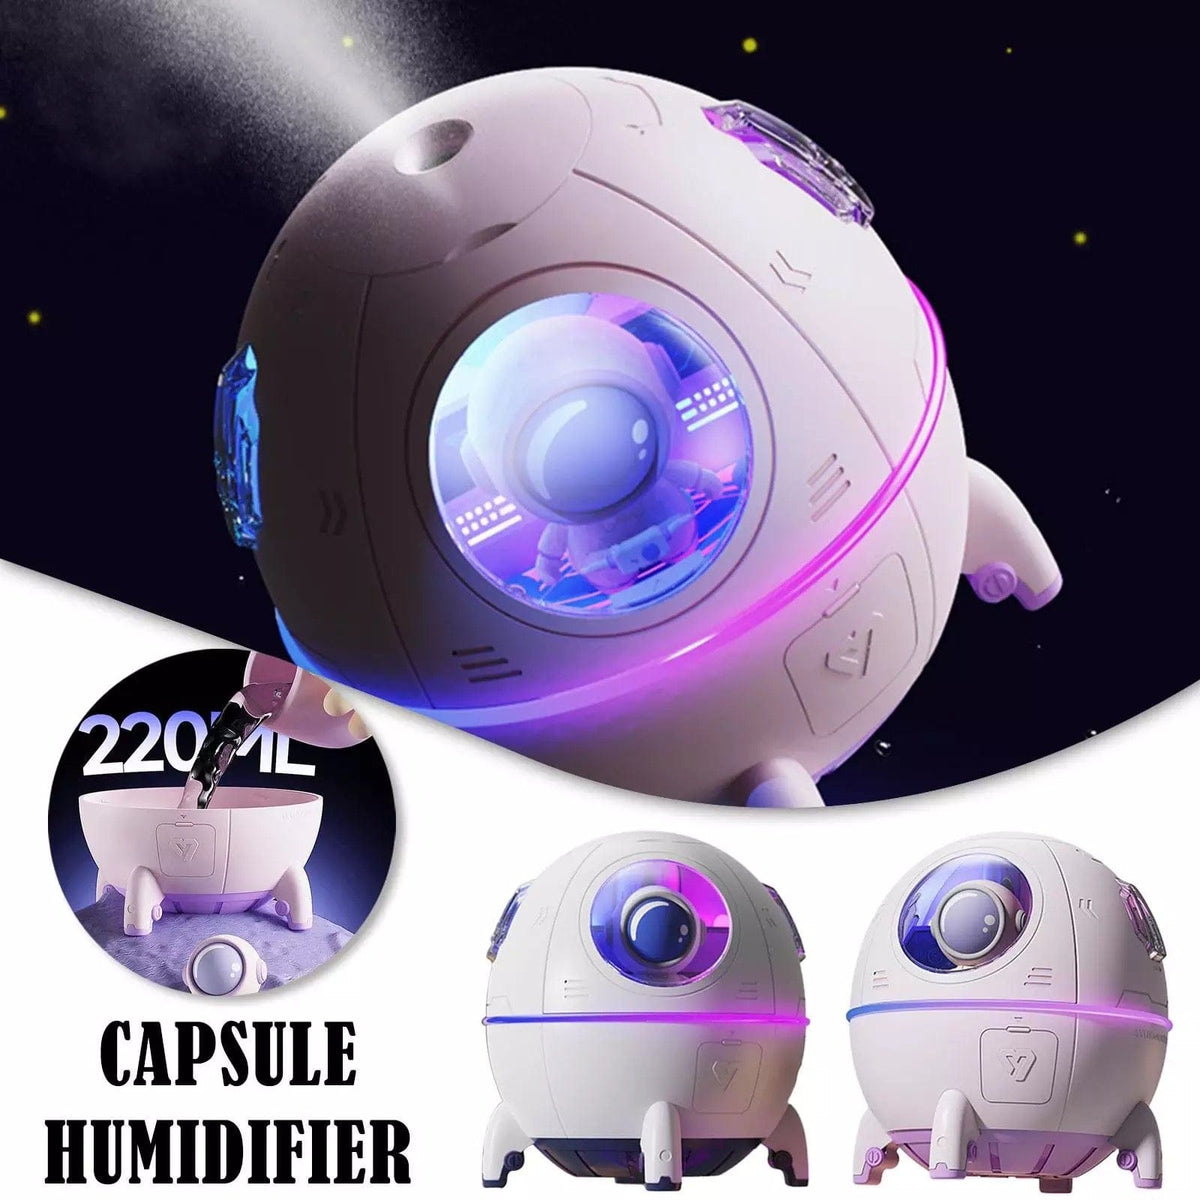 Kids Space Capsule Humidifier